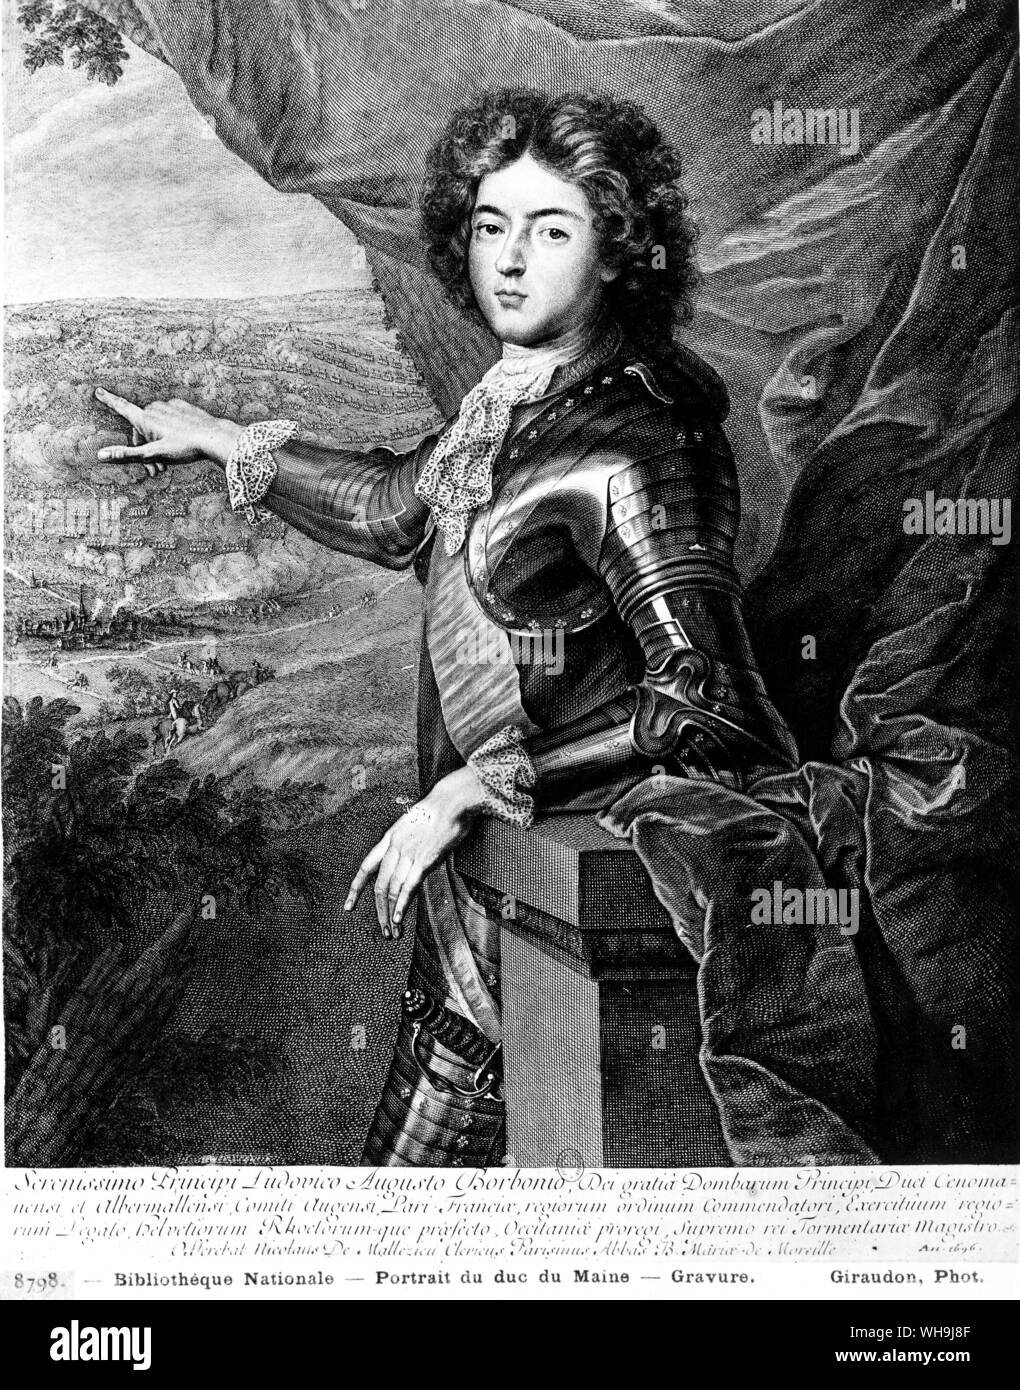 Portrait du Duc du Maine. Serenissimo Principi Ludovico Augusto Borbonio. Banque D'Images